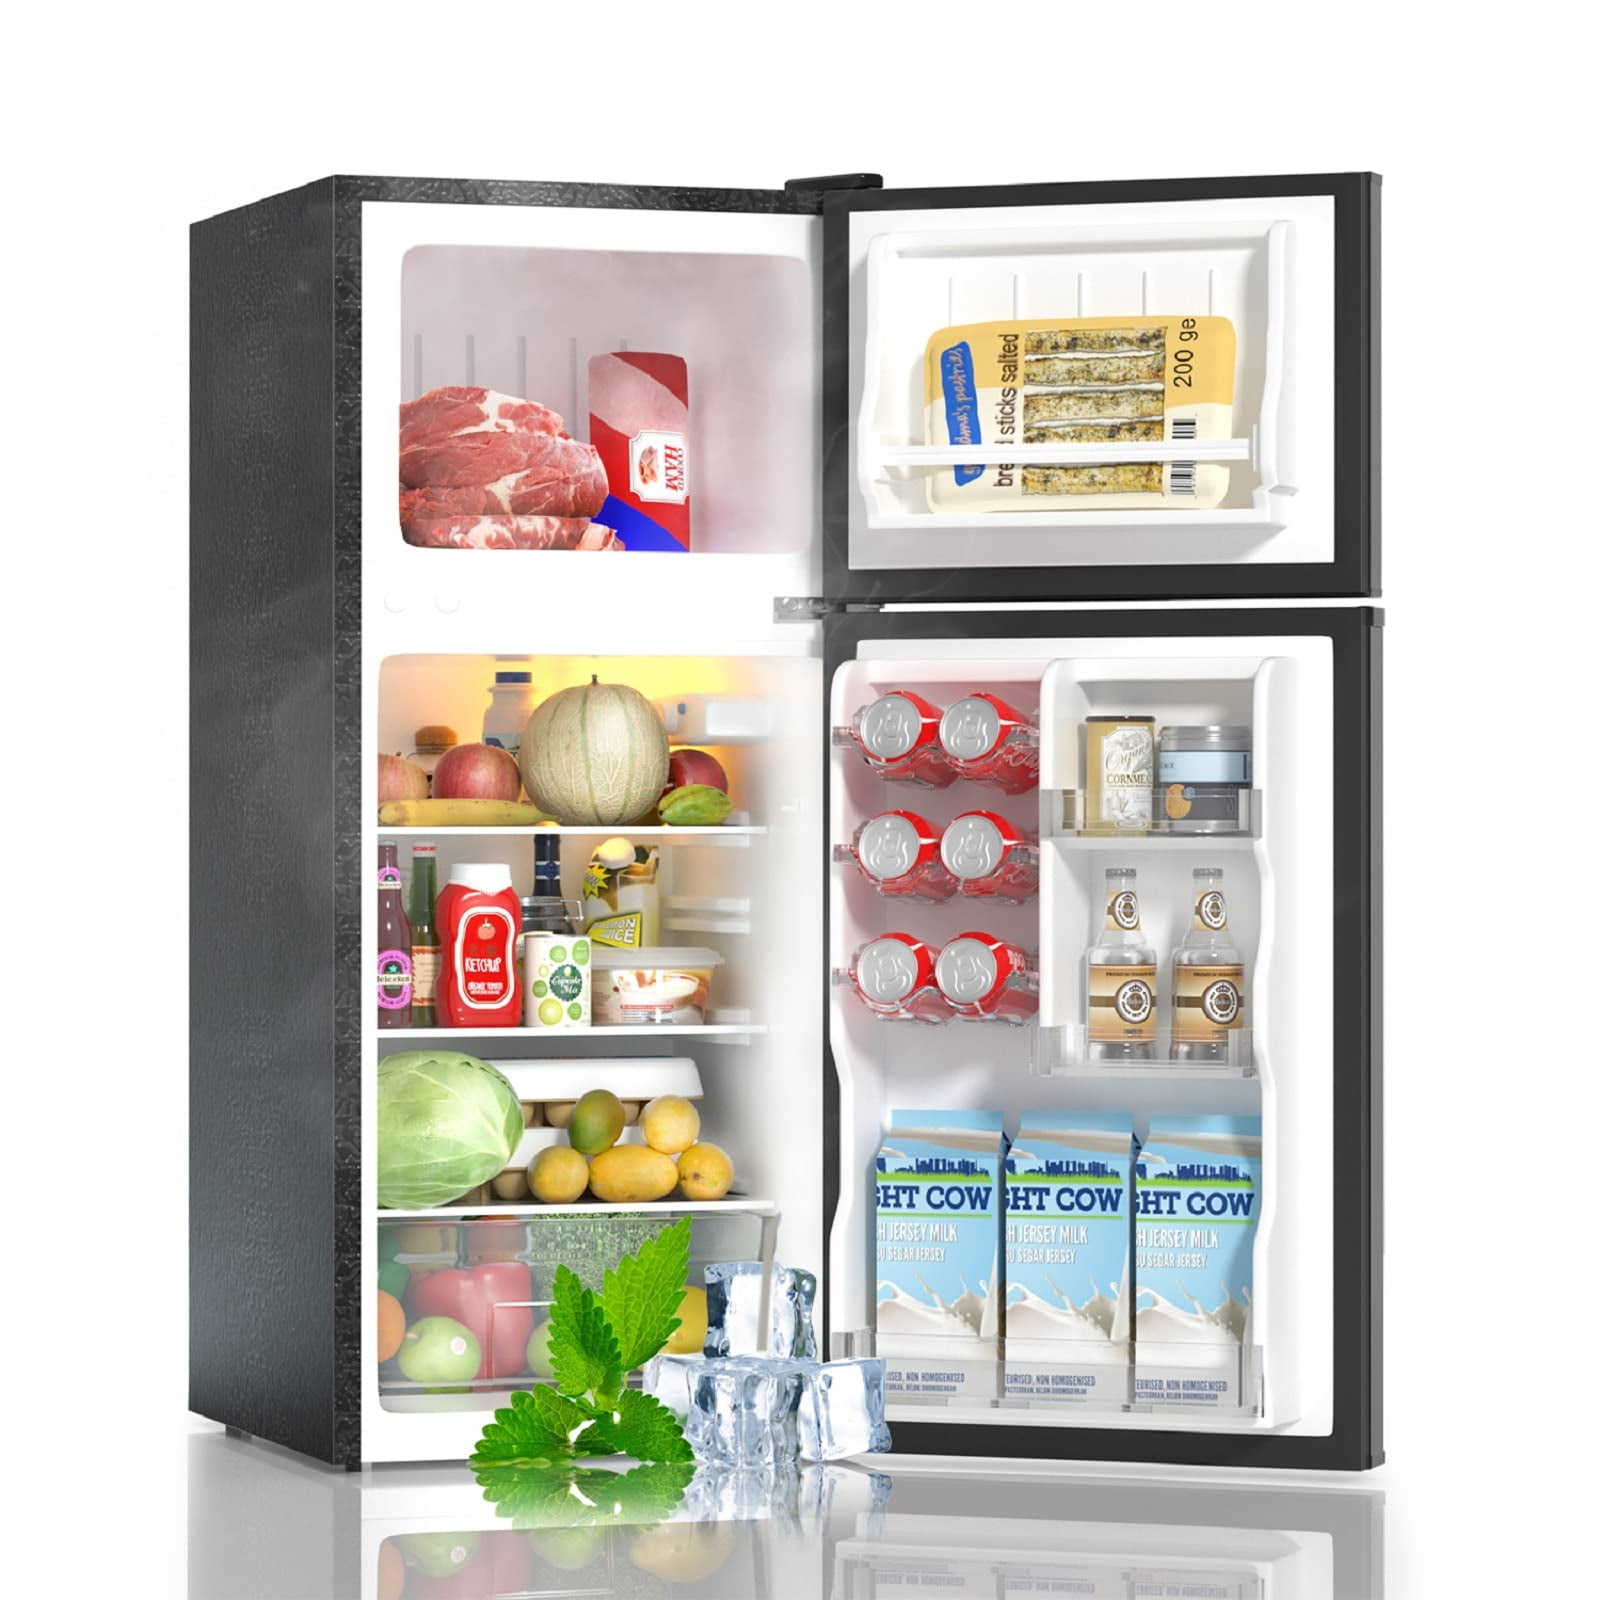 BANGSON Small Fridge with Freezer, 4.0 Cu.Ft, Samll Refrigerator